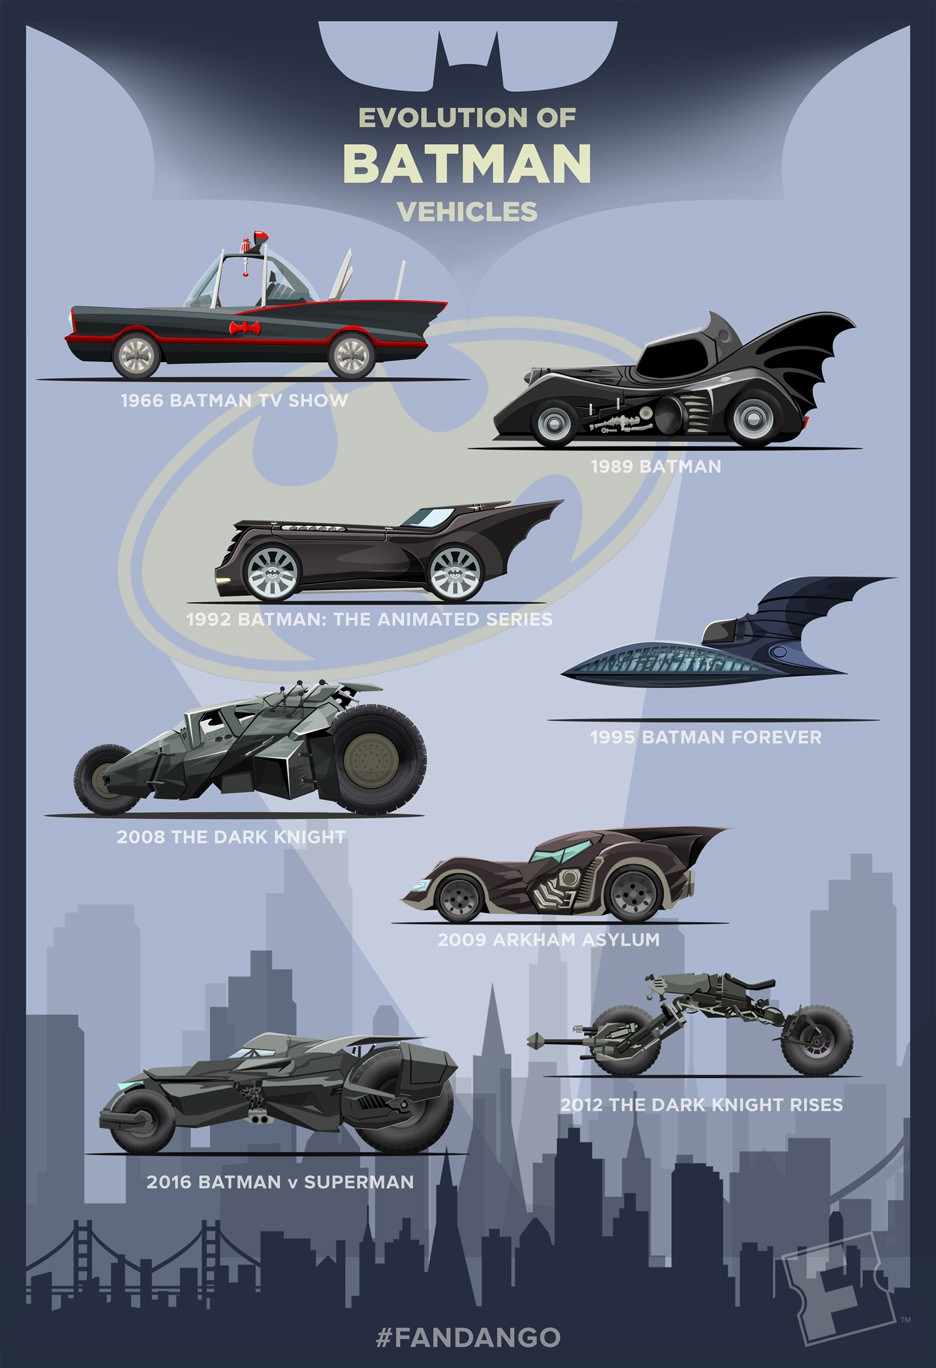 Evolution of the Batmobile